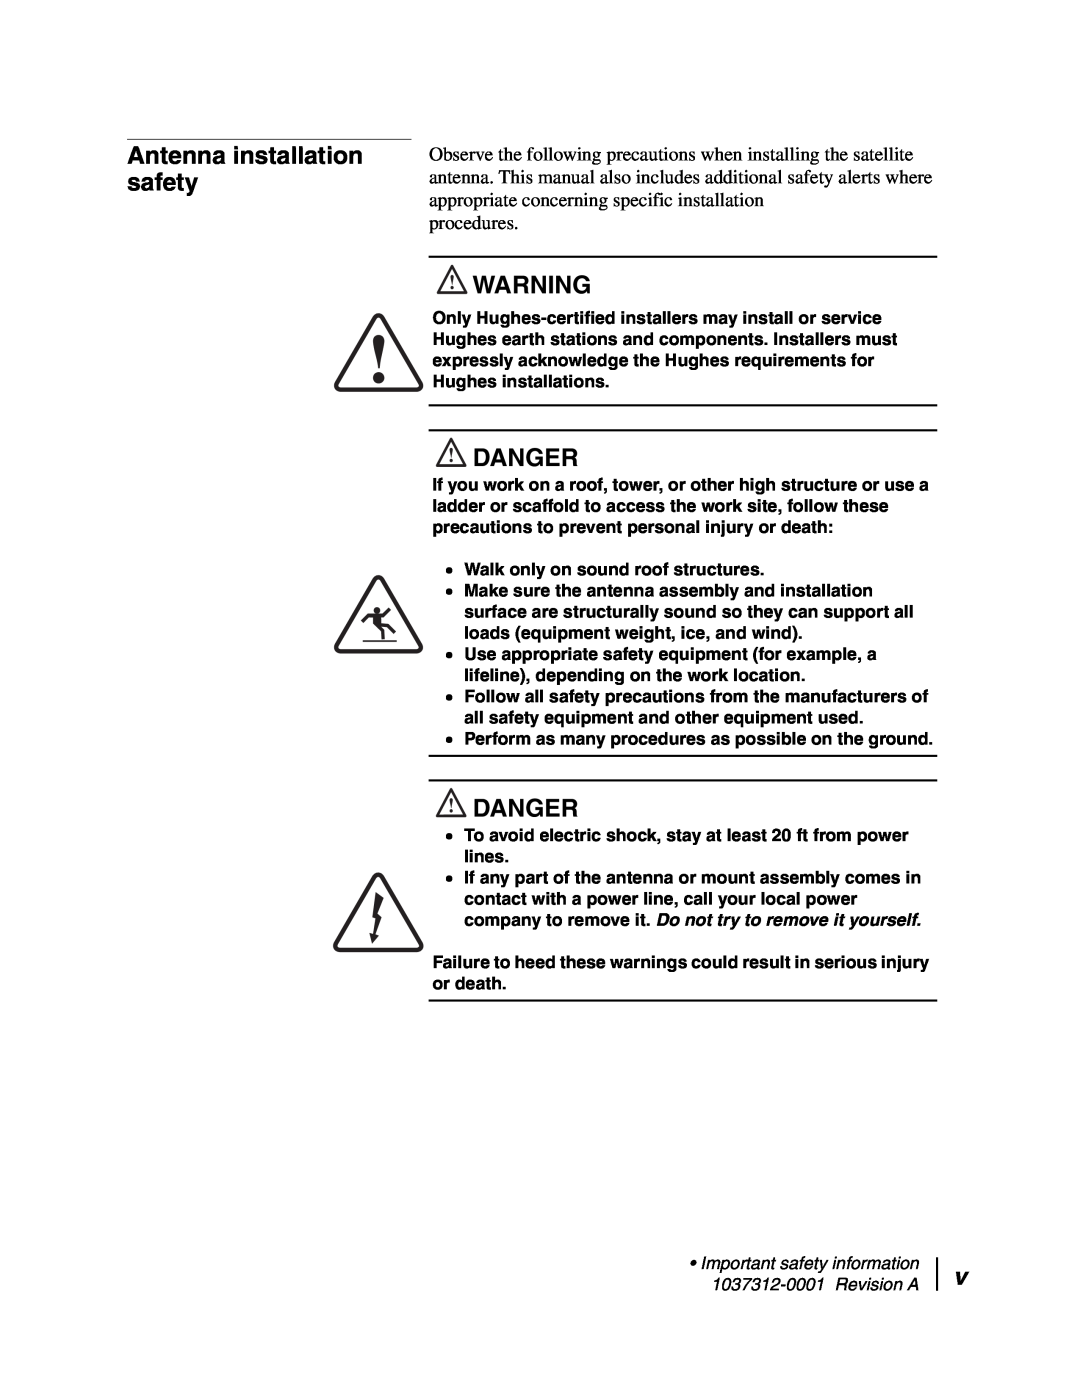 Hughes AN6-098P installation manual Antenna installation safety, Danger, procedures 